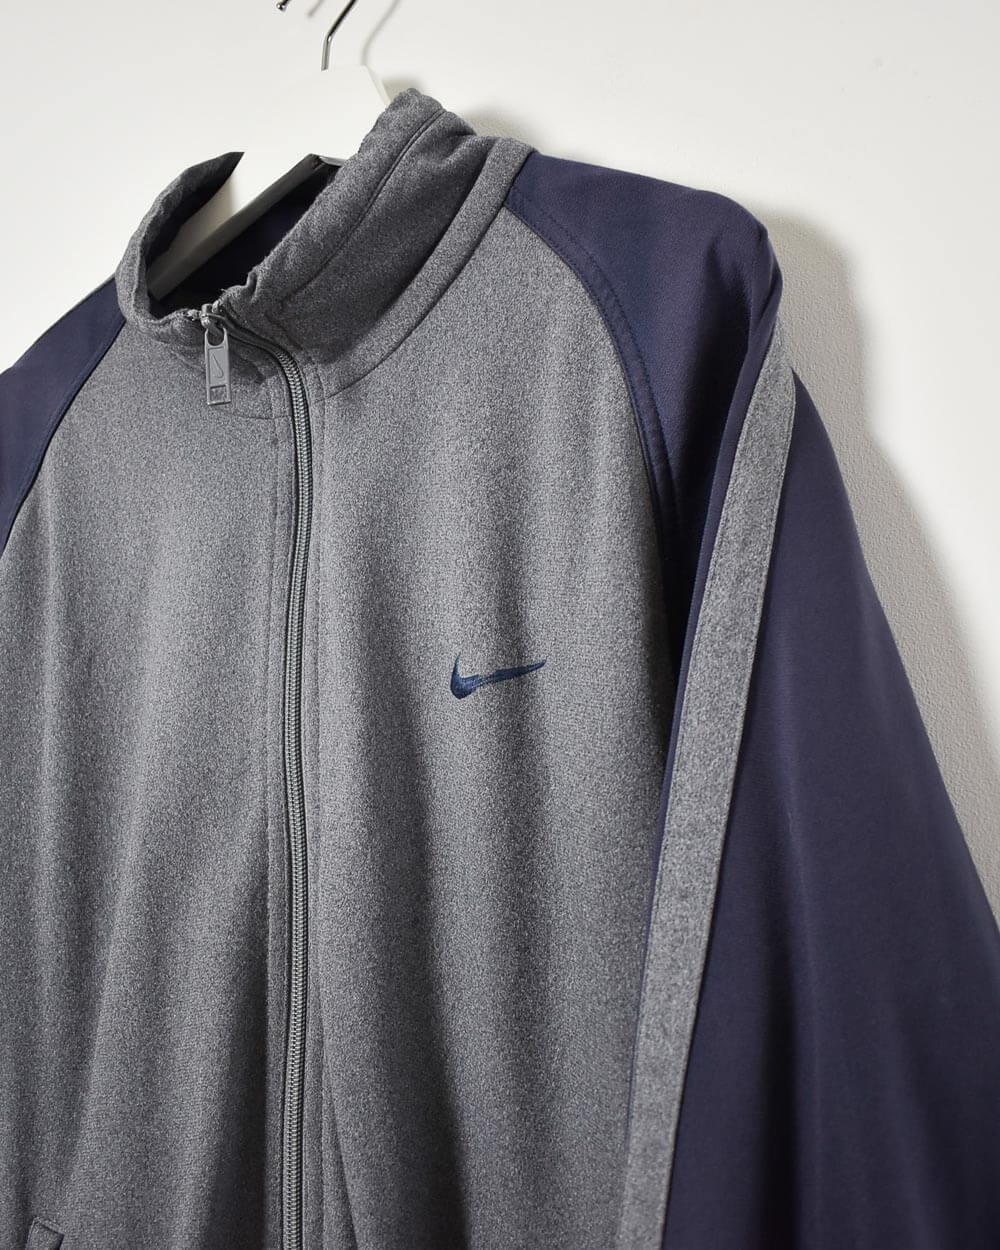 Grey Nike Tracksuit Top - Medium